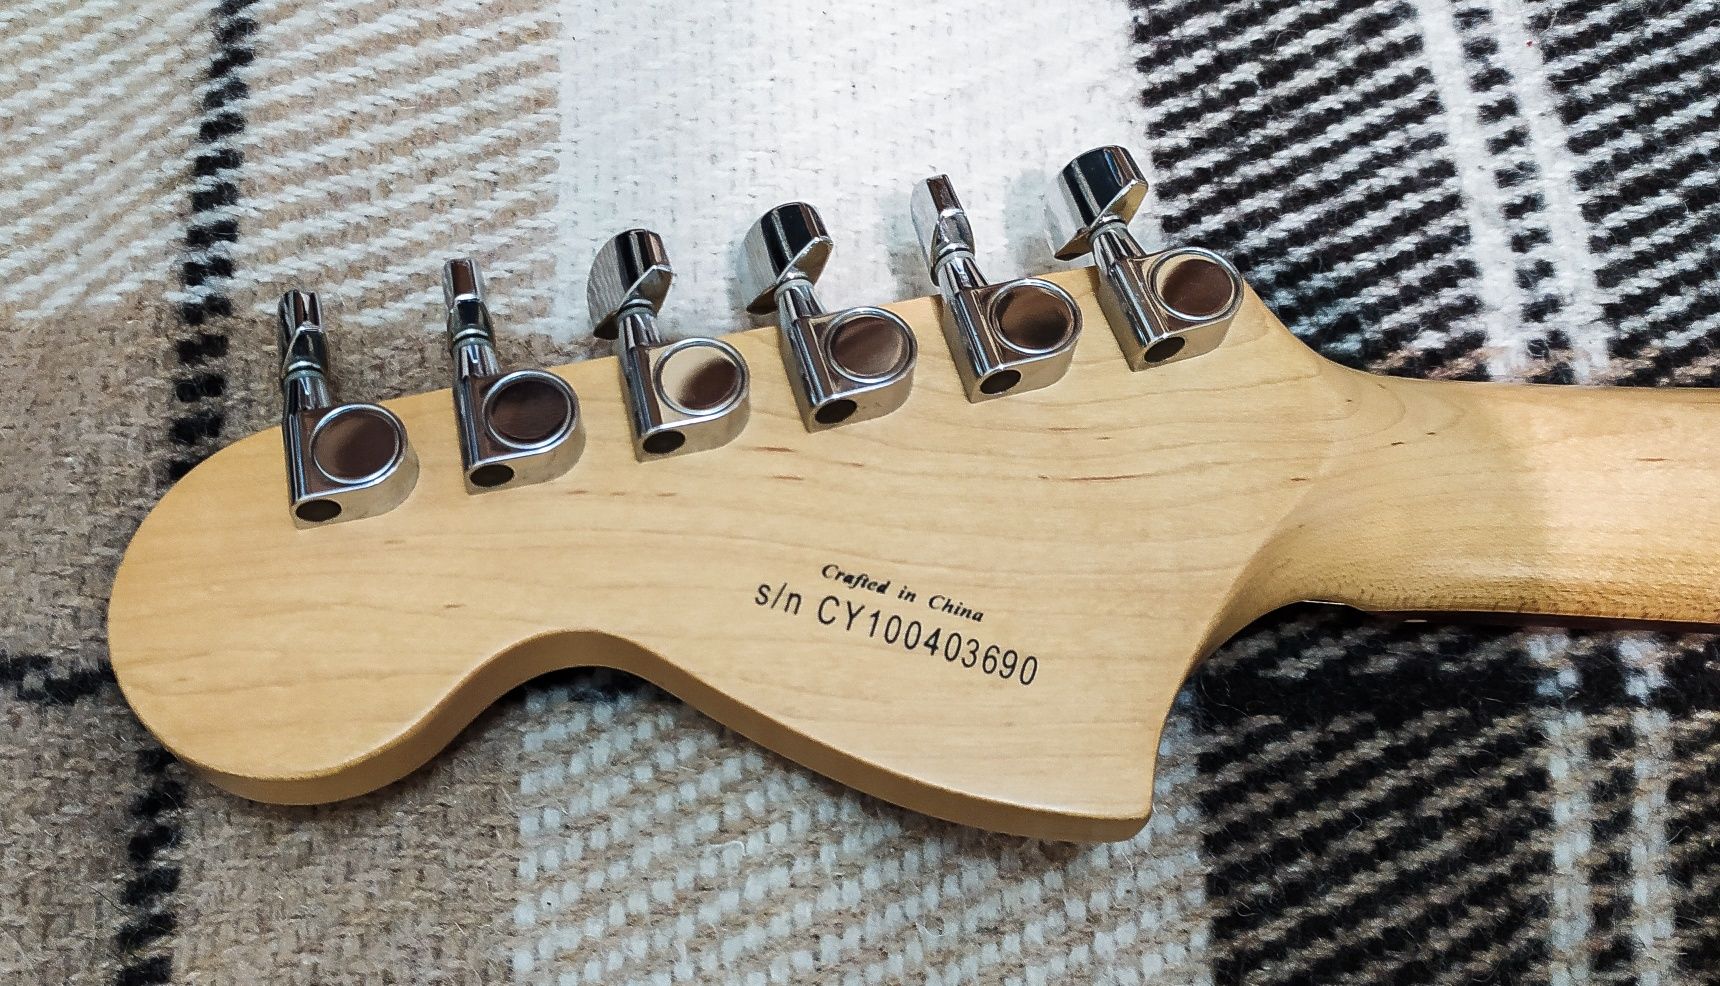 Squier Affinity Stratocaster SSS (Fender)